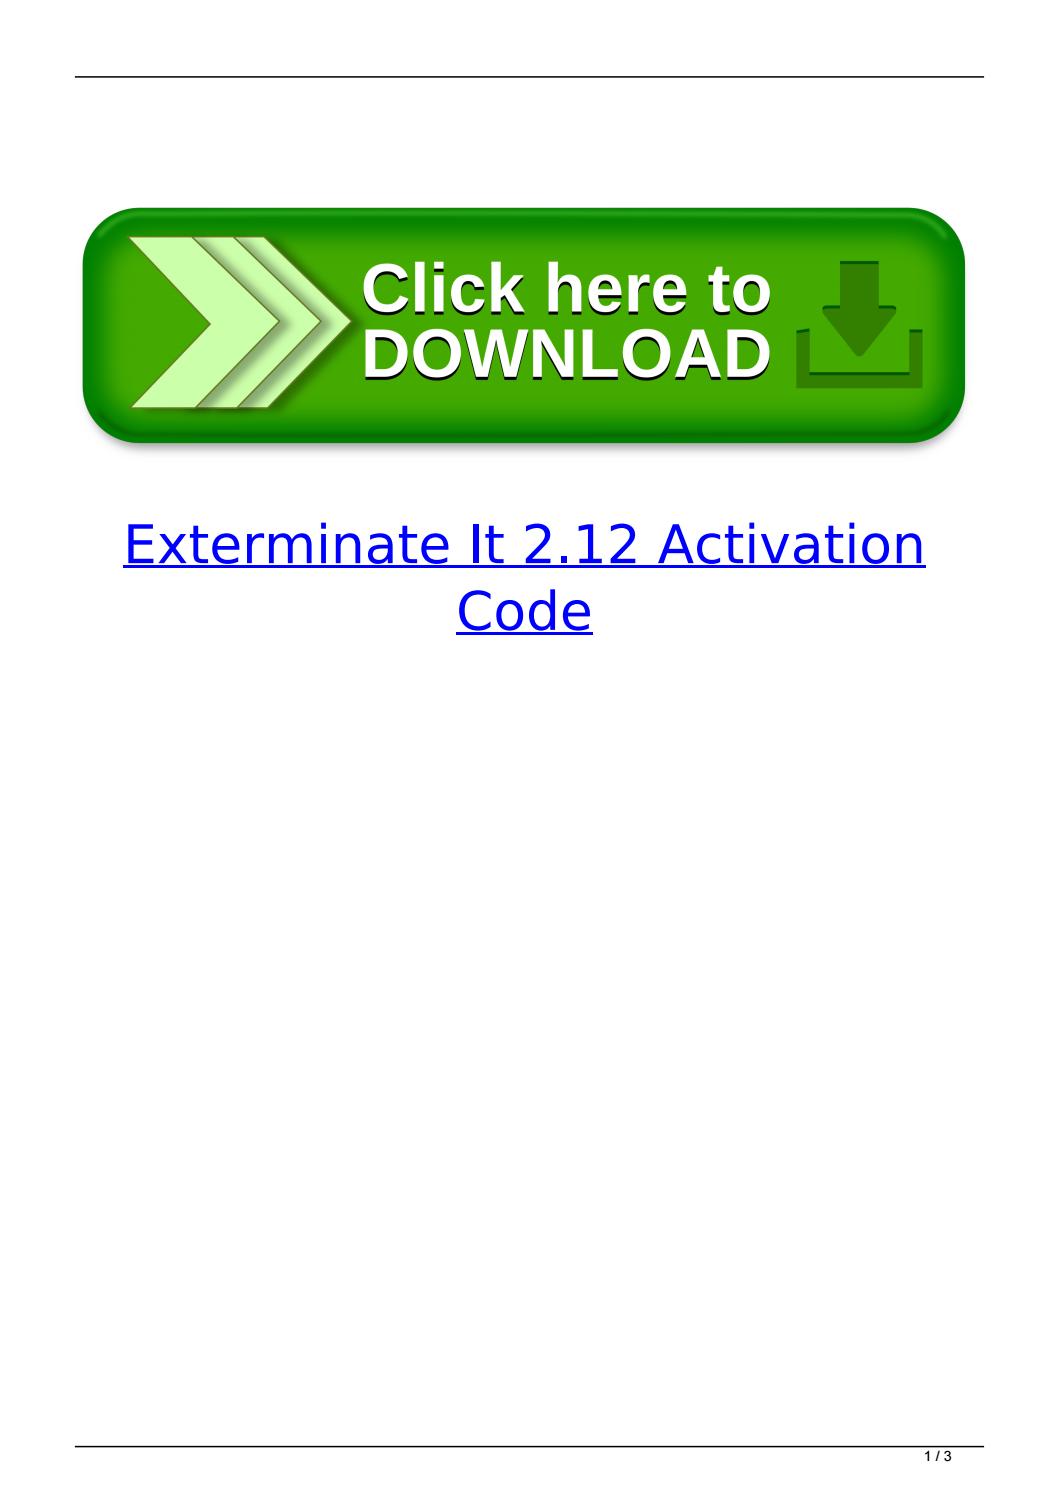 exterminate it 2.21 activation code